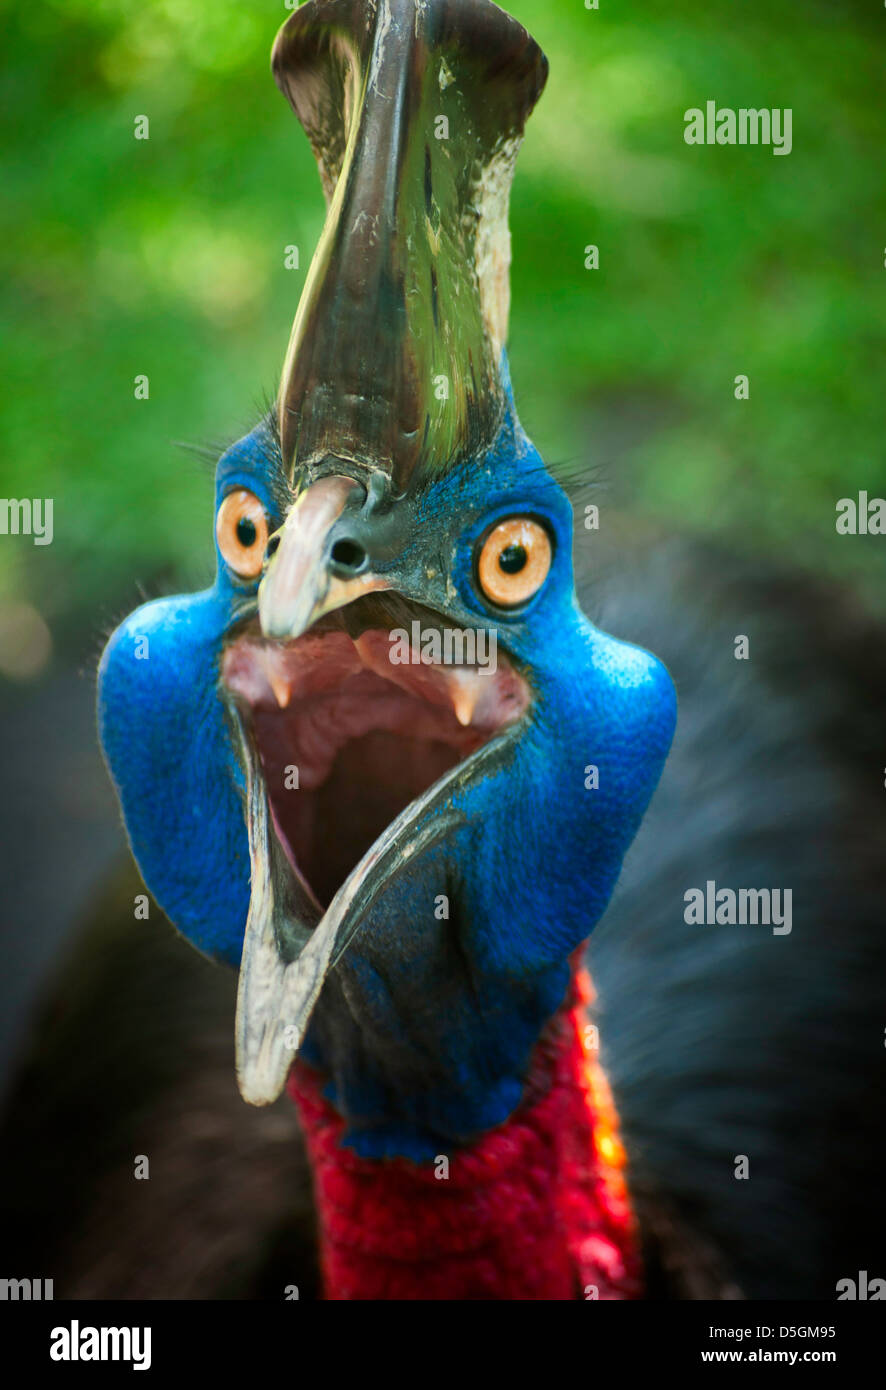 Imágenes de Australian cassowary mire a la cámara de enojo. Foto de stock